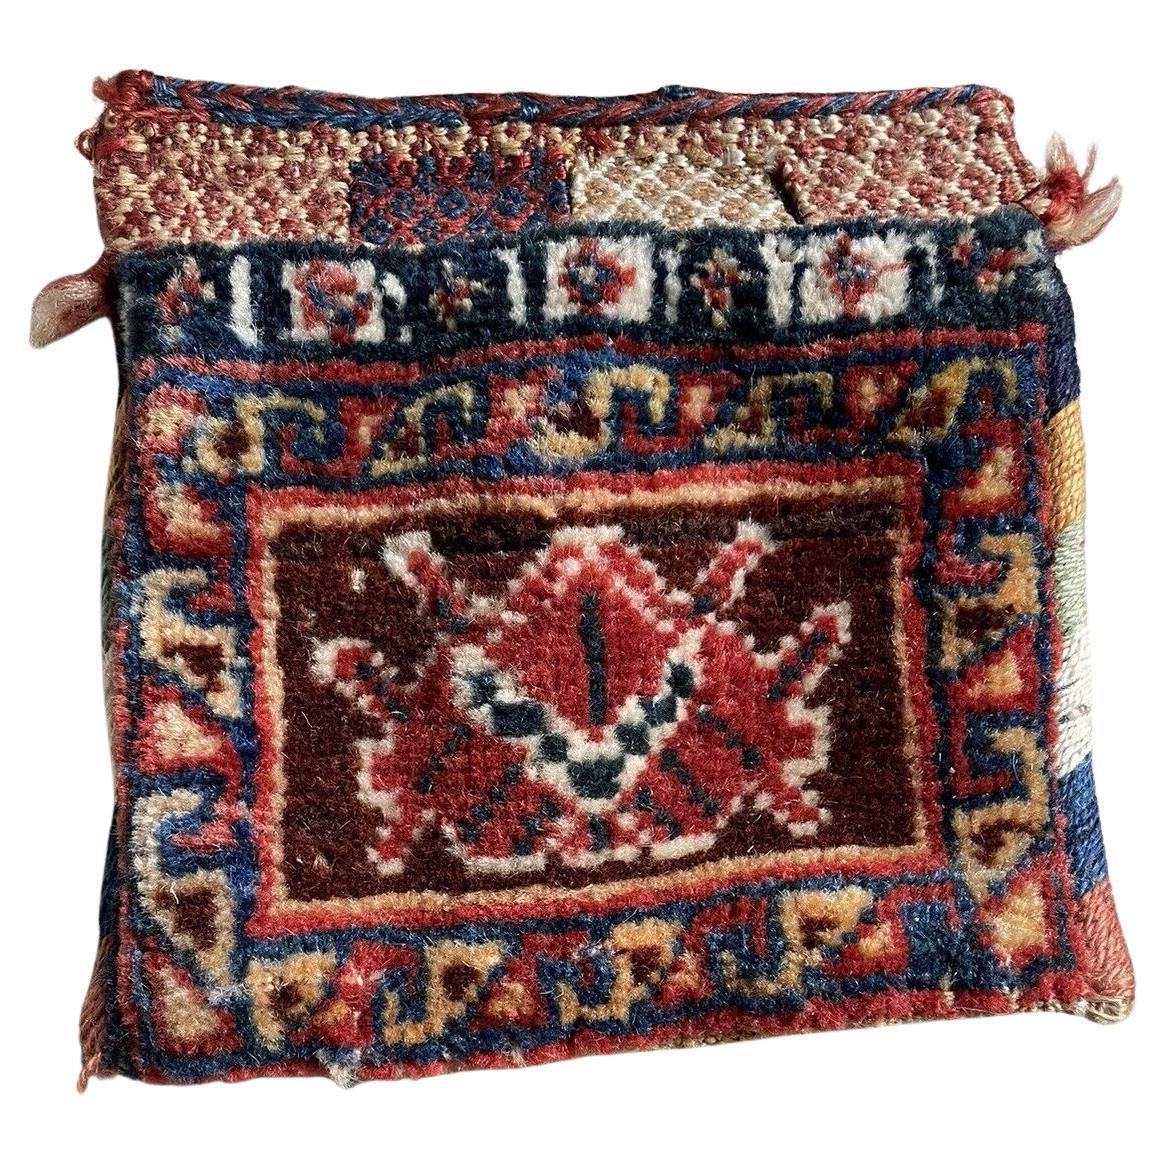 Handmade Antique Persian Gashkai Small Bag 6" x 6", 1900s - 1N13 For Sale